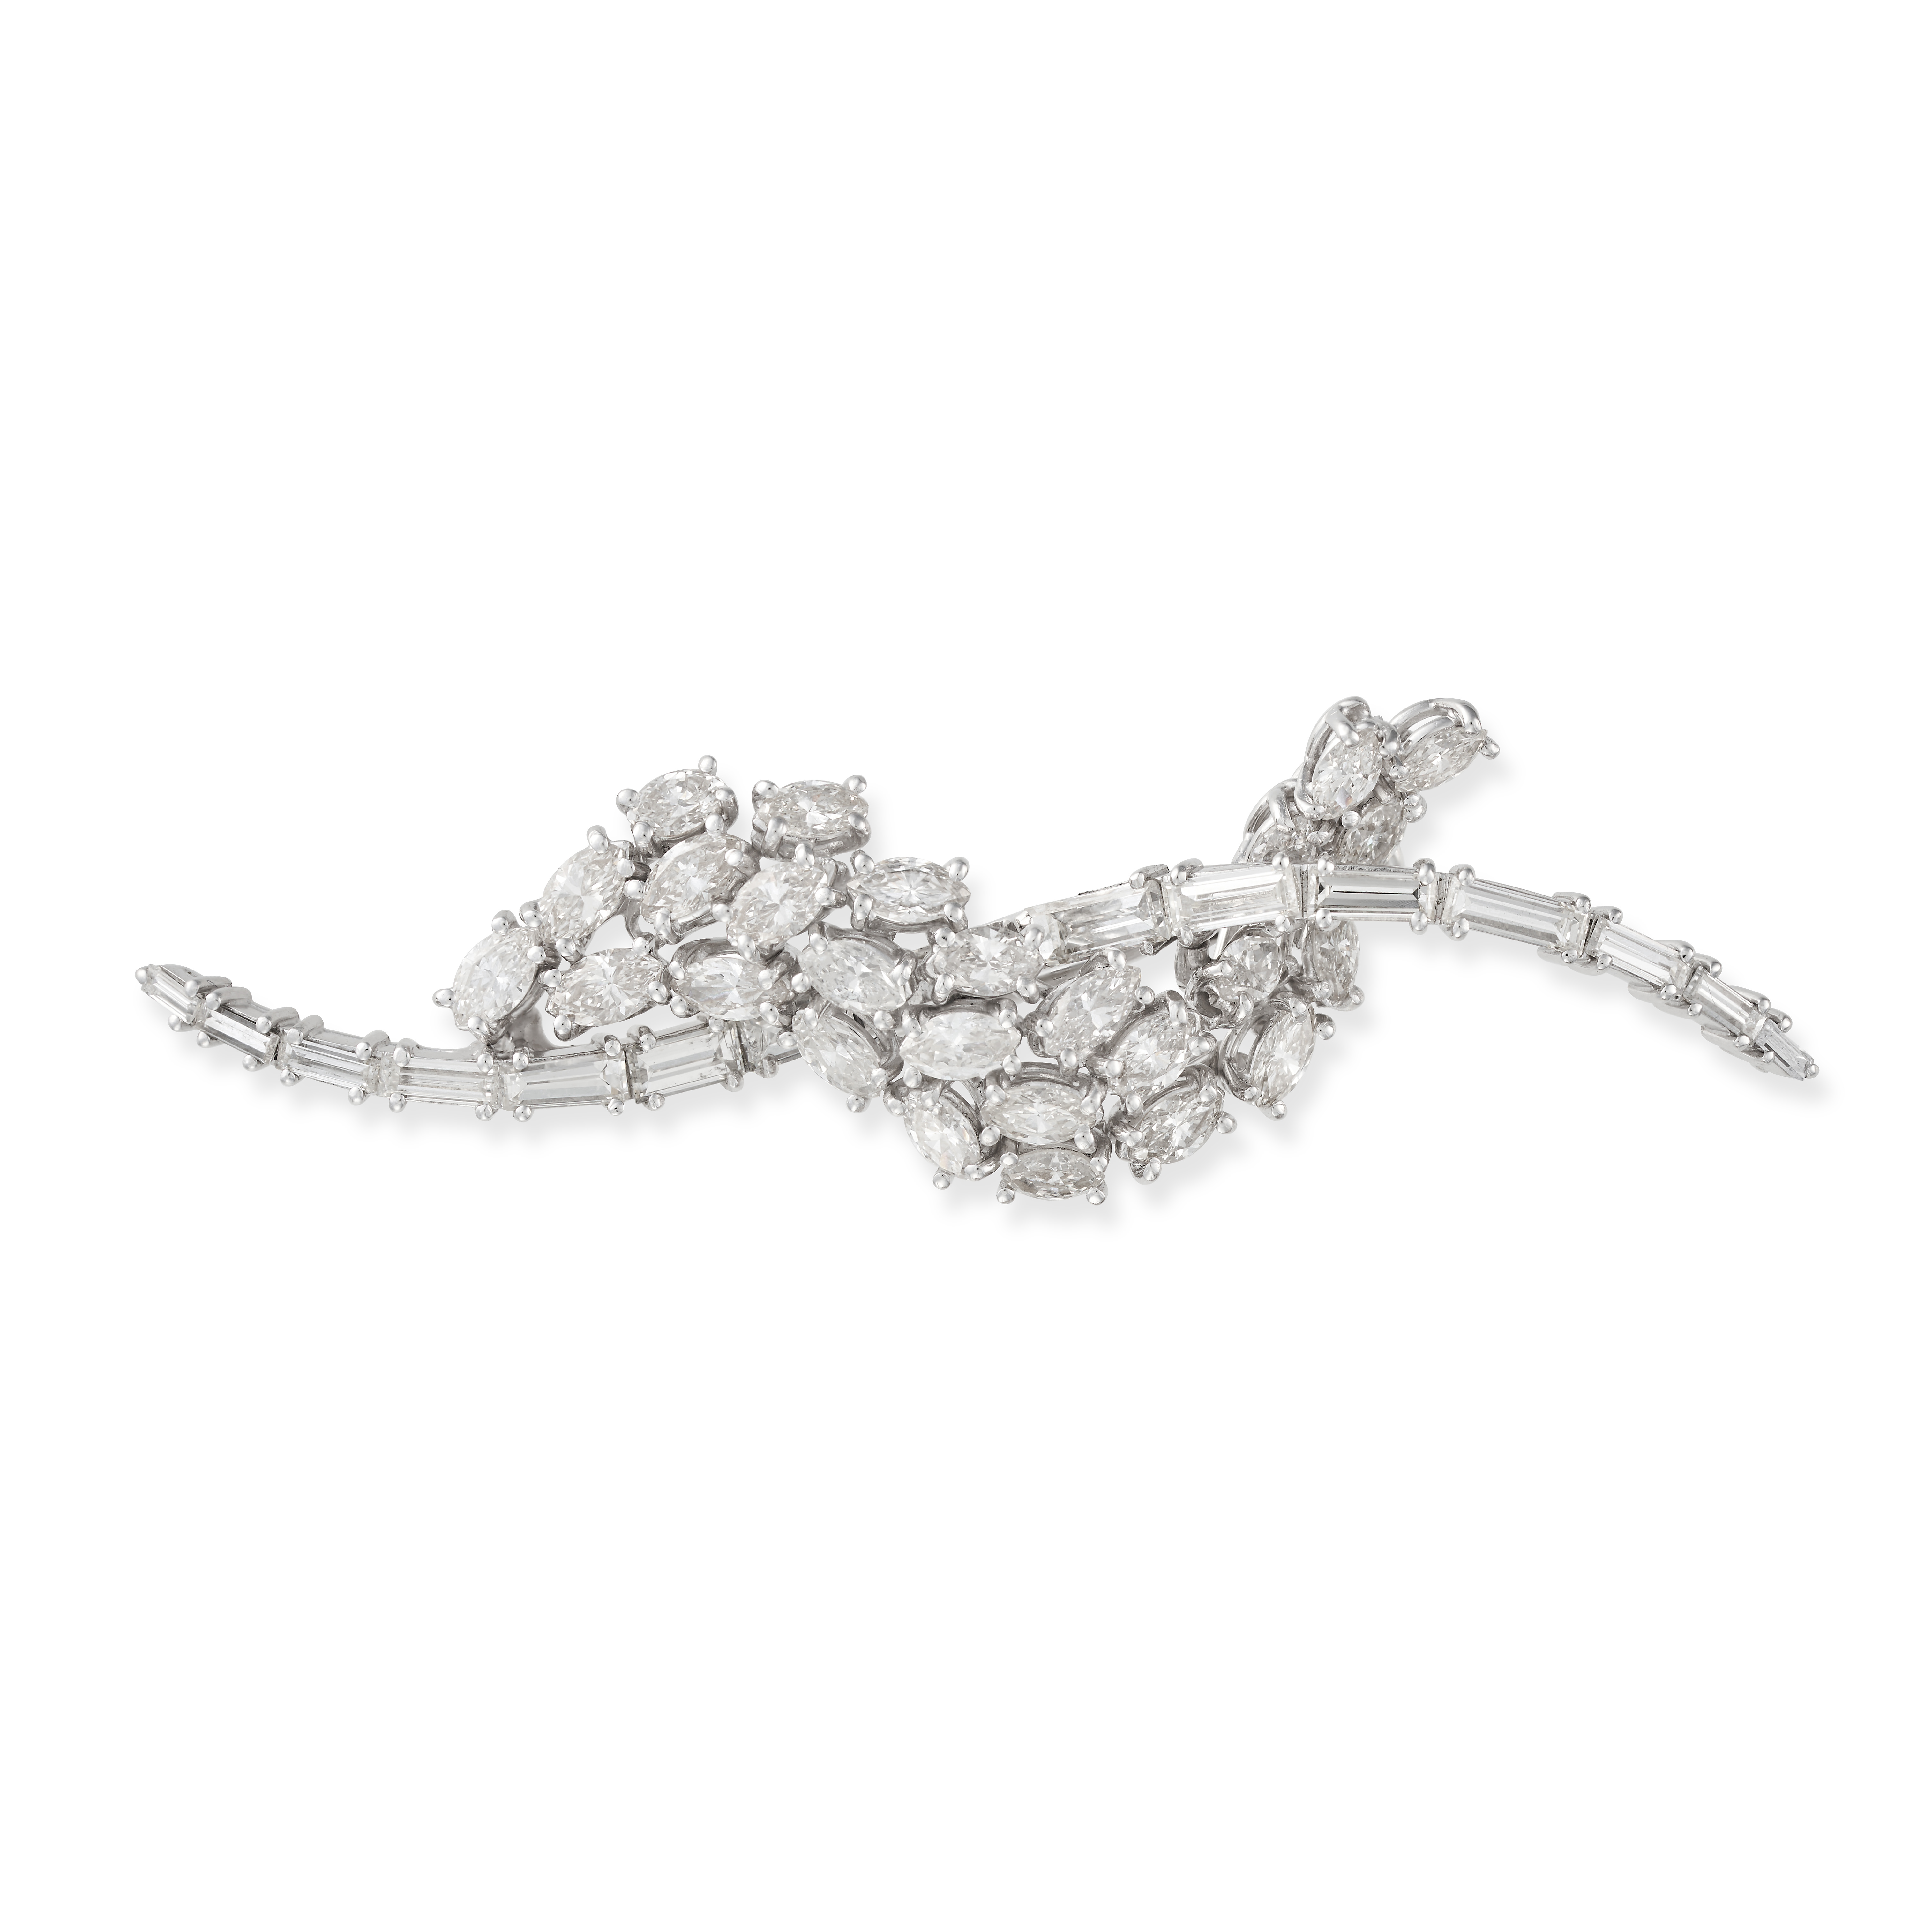 BULGARI, A DIAMOND BROOCH in scrolling design, comprising a curved row of baguette cut diamonds, ...